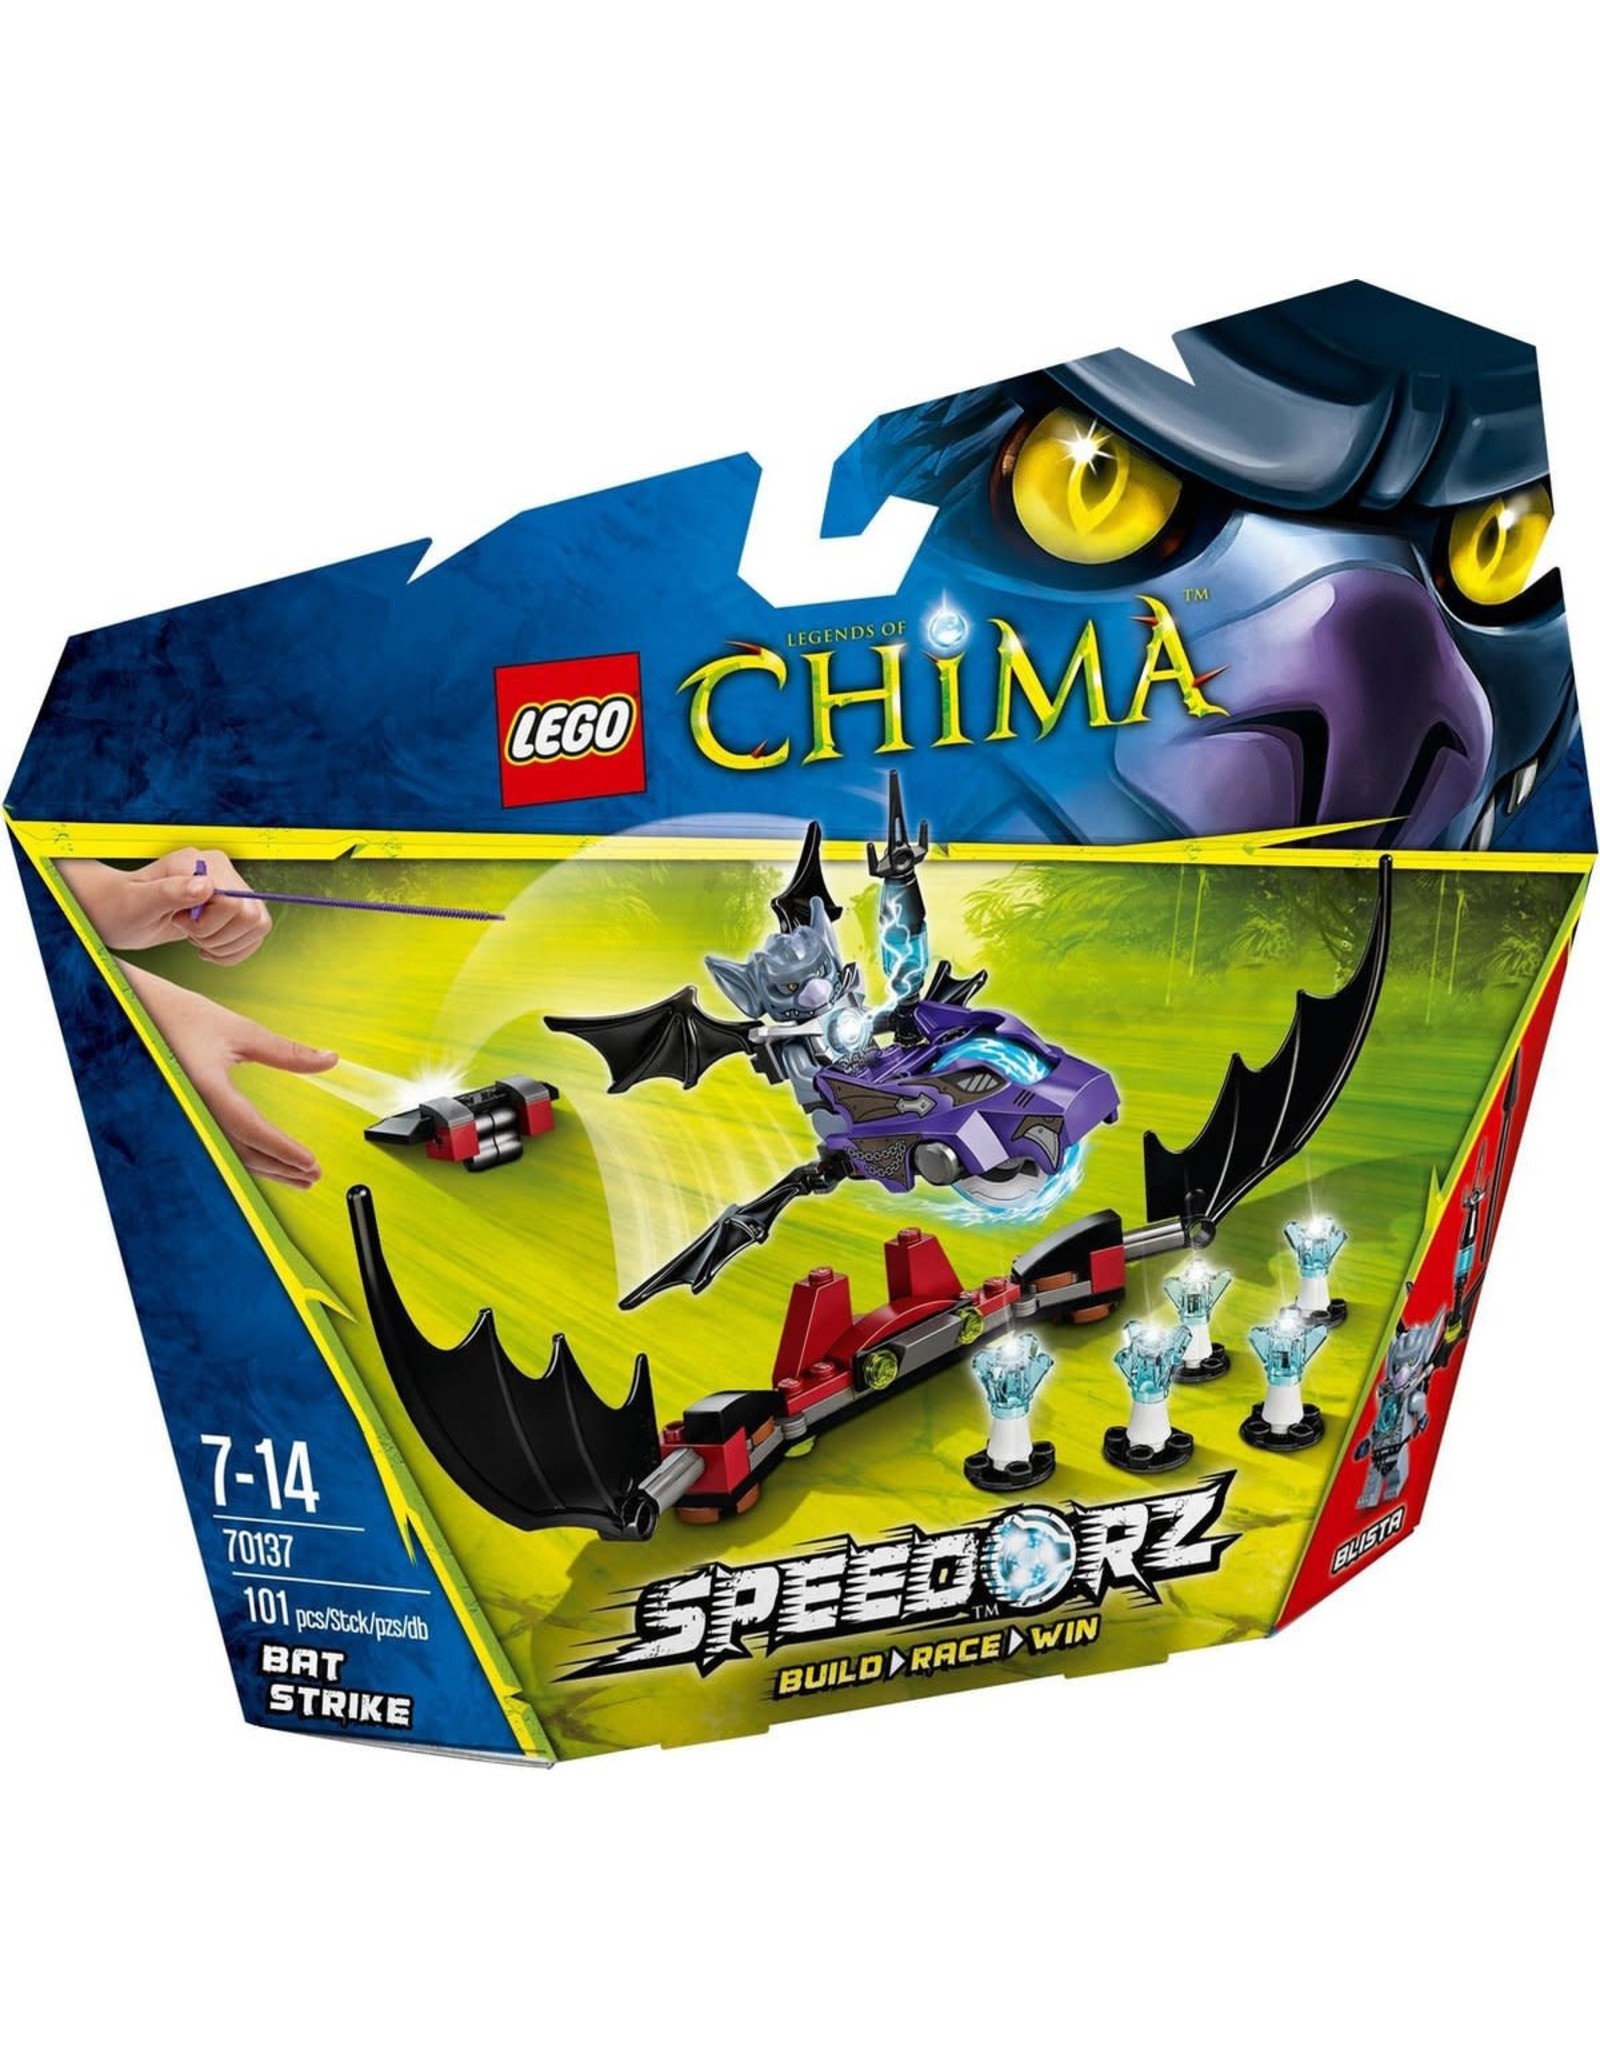 LEGO Lego Chima 70137 Vleermuisaanval - Bat Strike